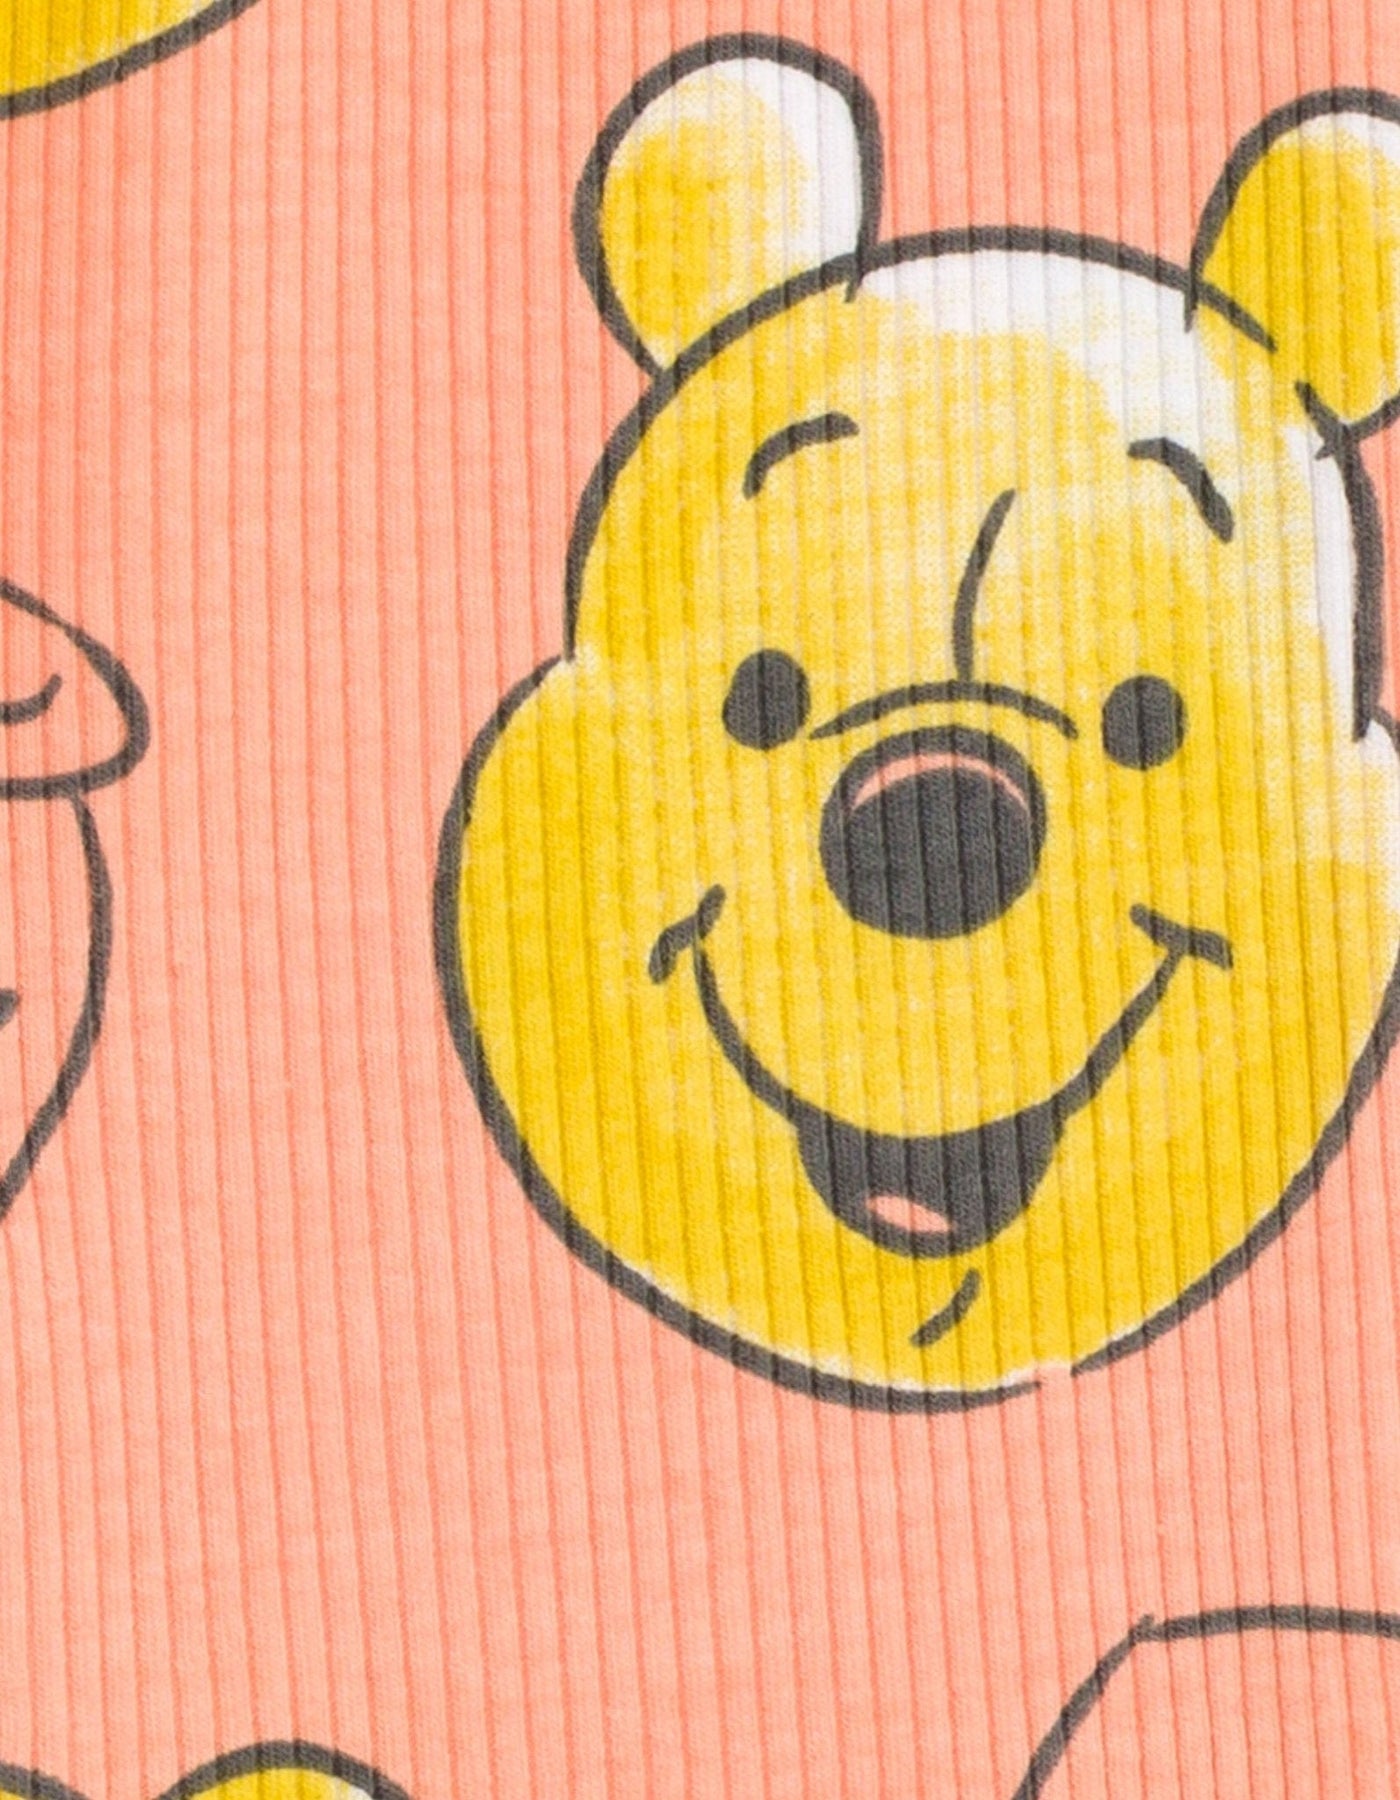 Disney Winnie the Pooh Peplum T-Shirt and Pants - imagikids